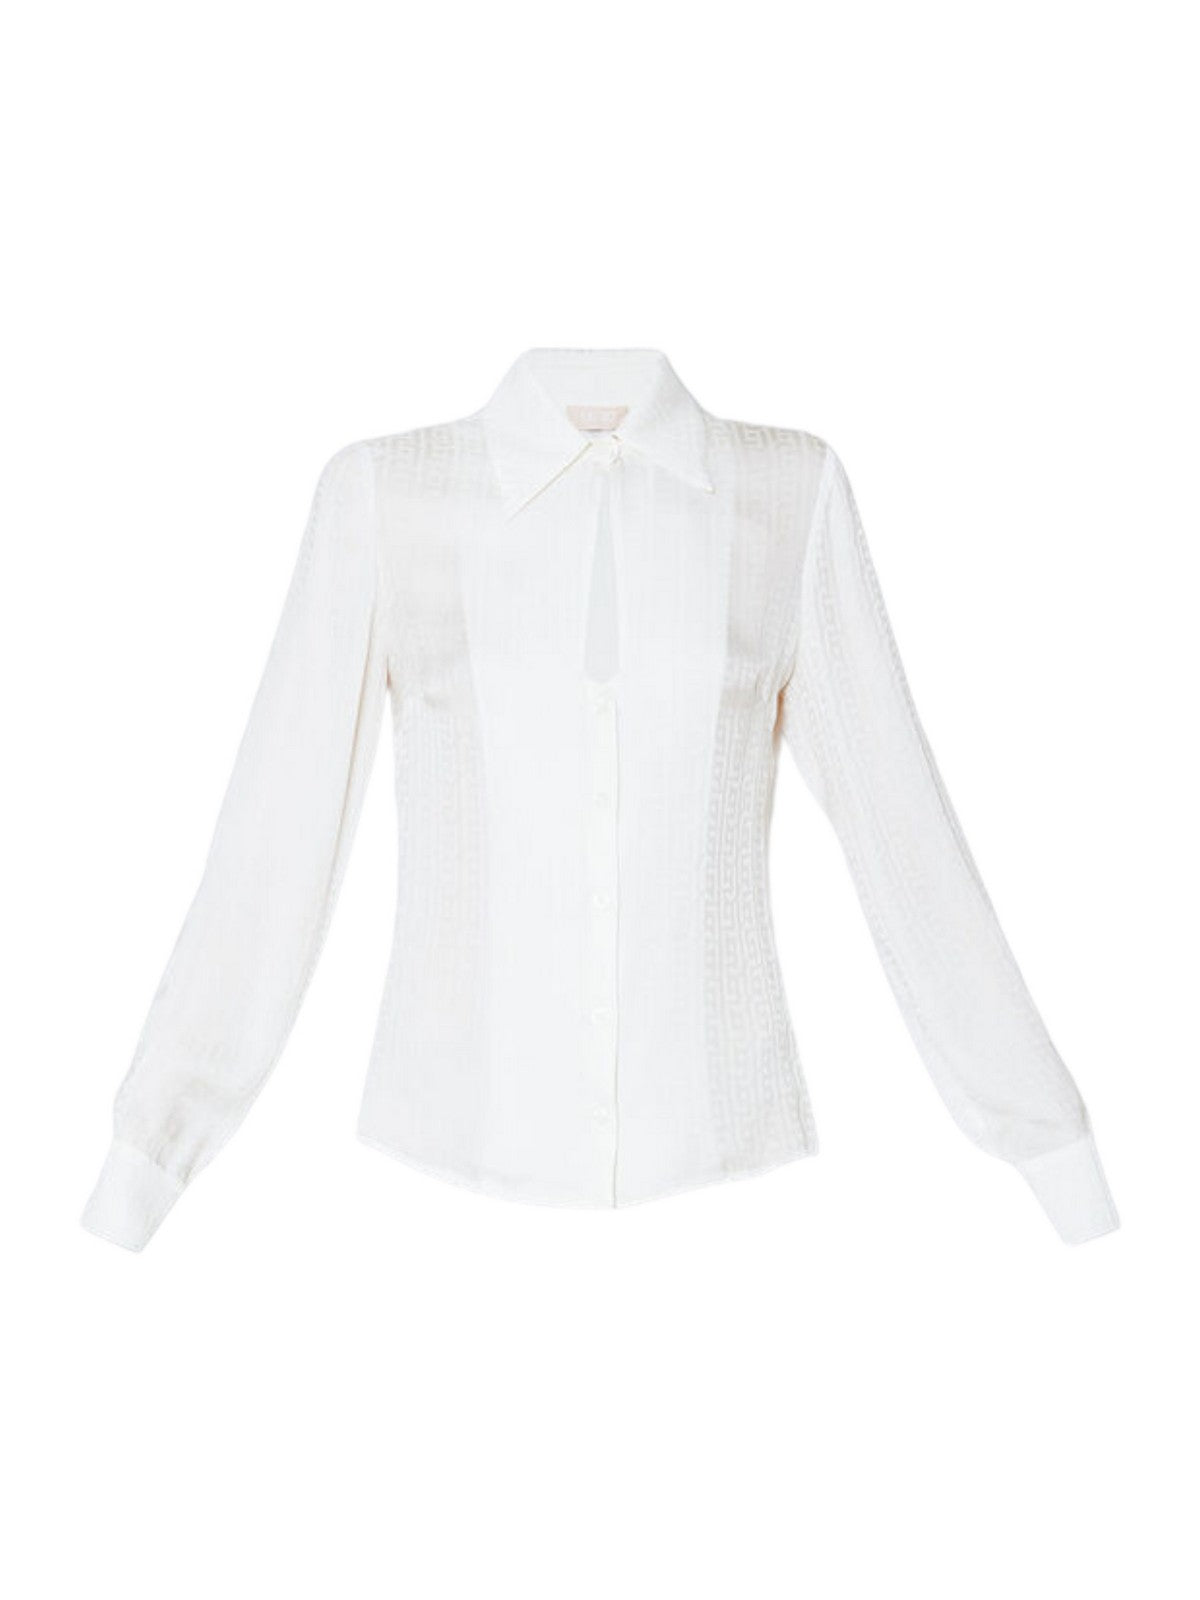 LIU JO WHITE Camicia Donna  MF3312T3702 V9183 Bianco